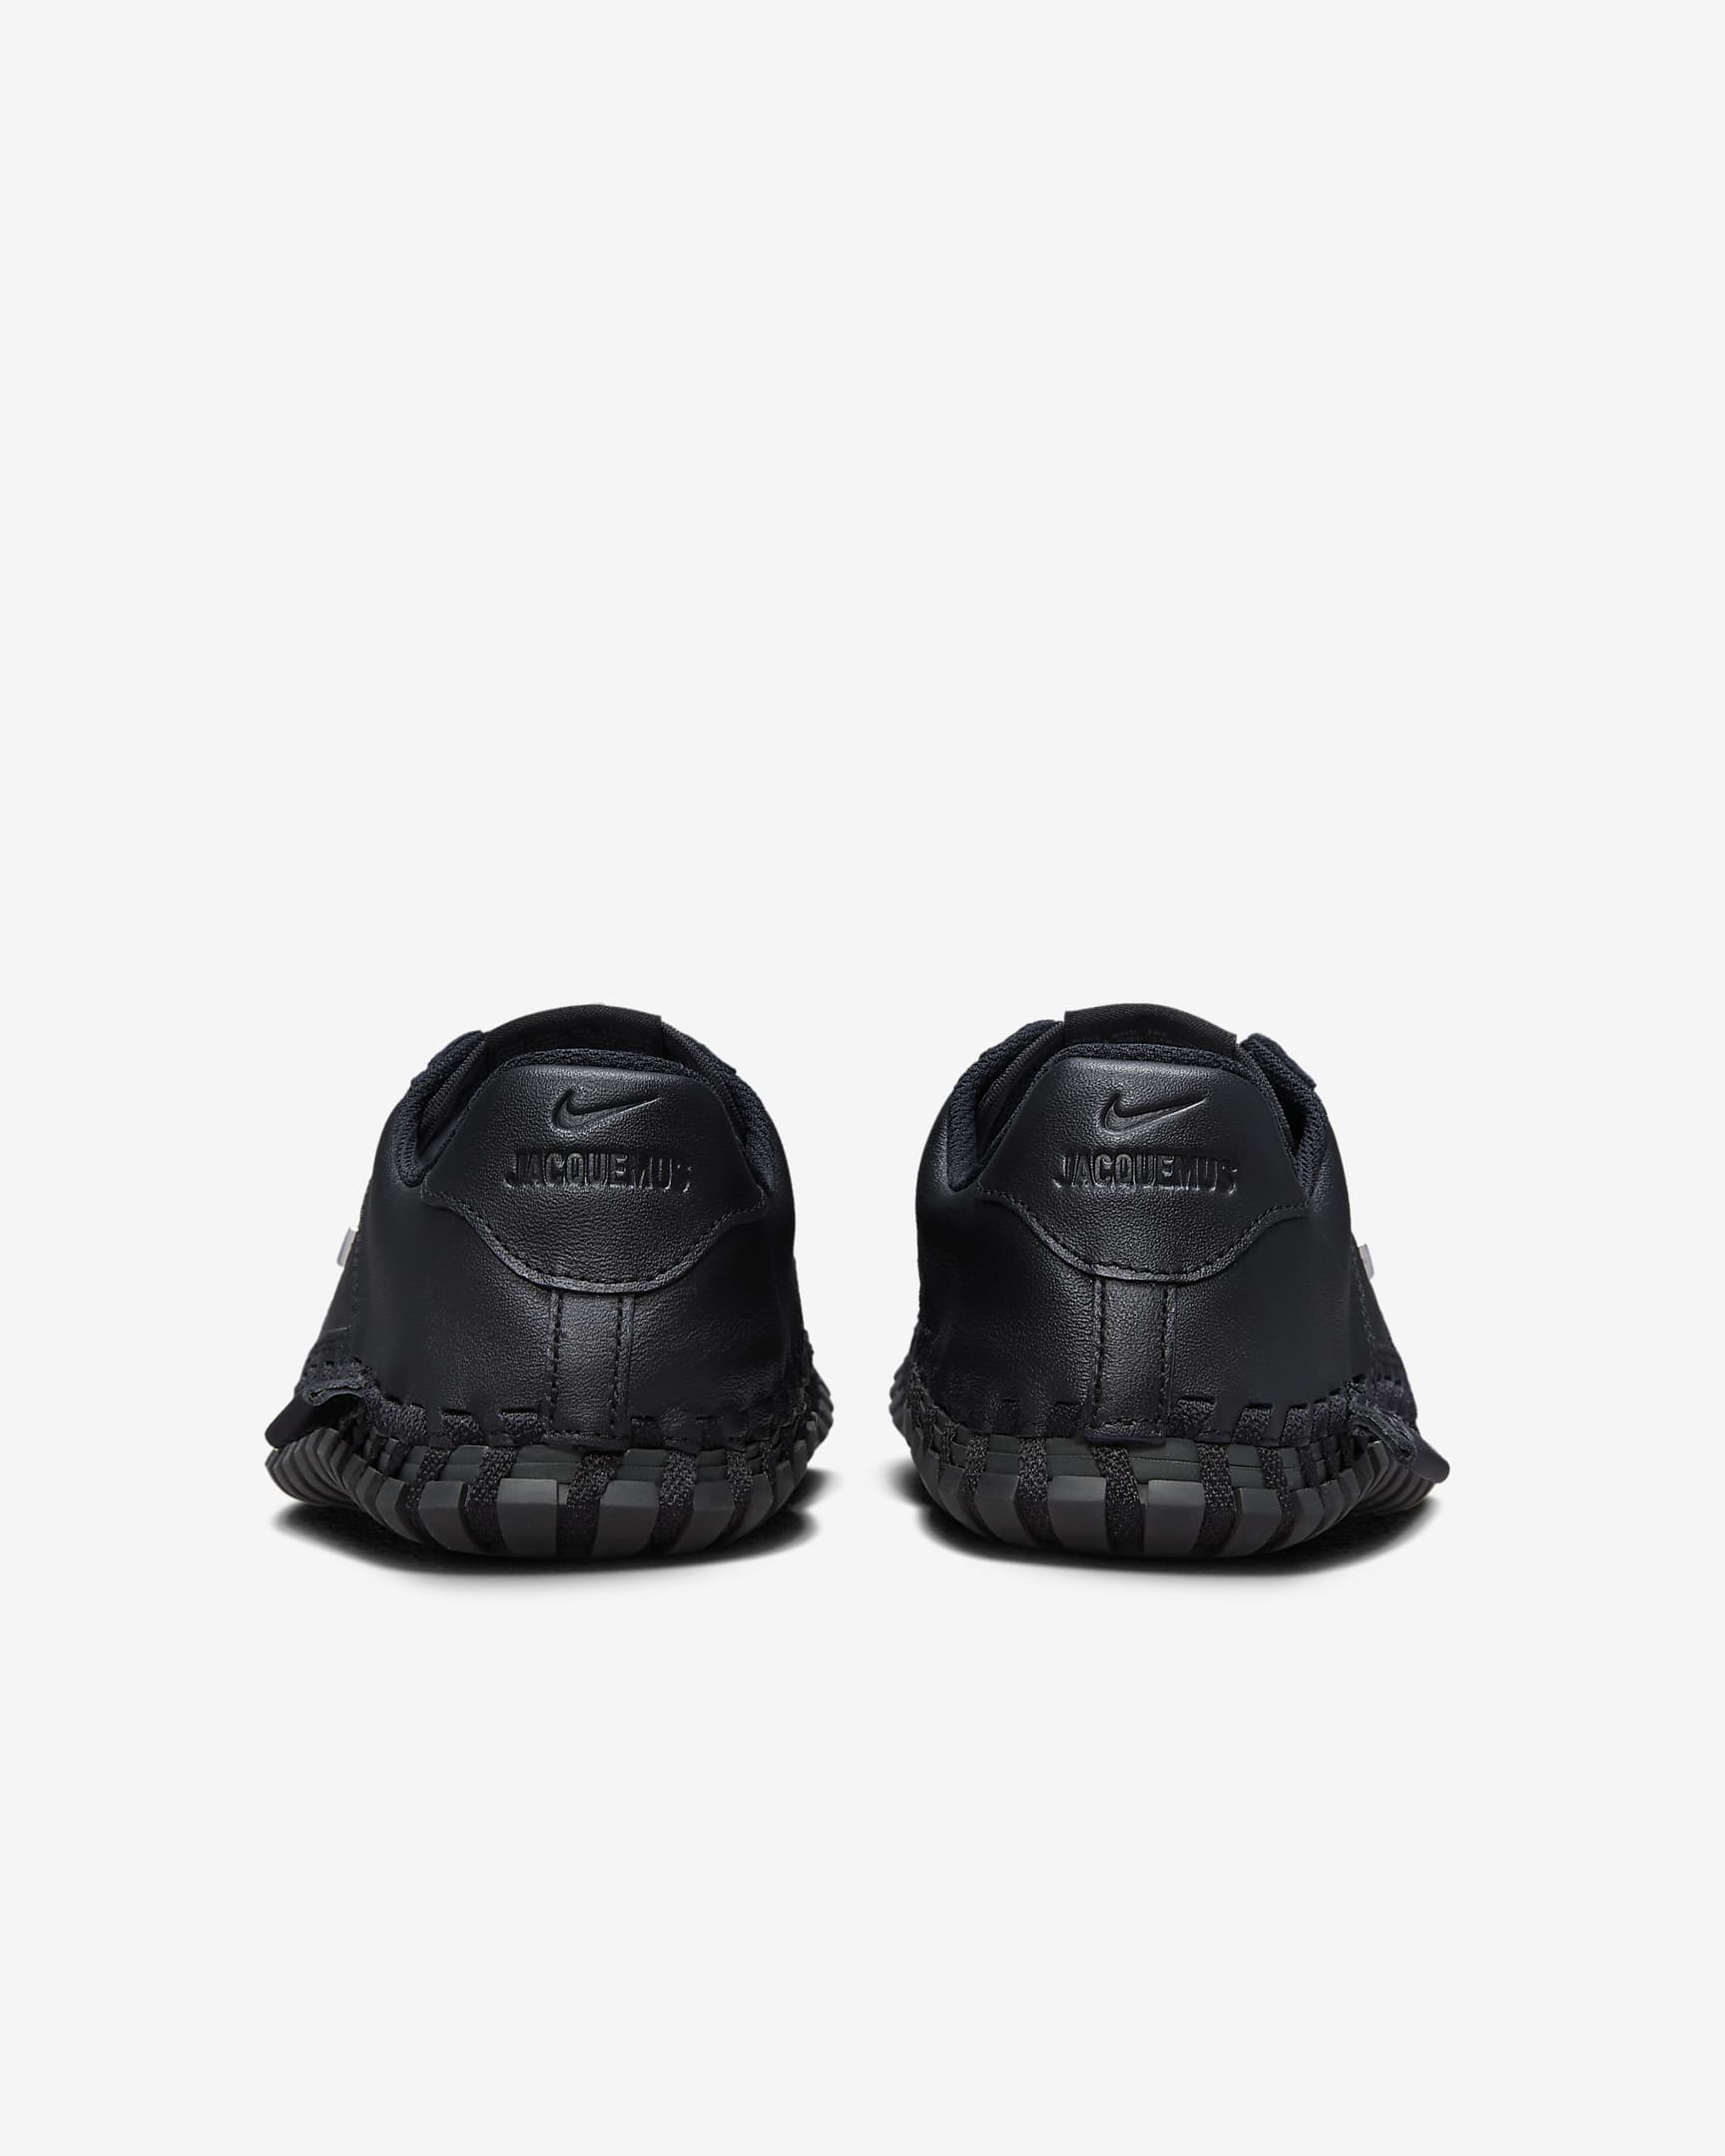 Nike J Force 1 Low LX SP Women's Shoes - Black/Black/Anthracite/Metallic Silver